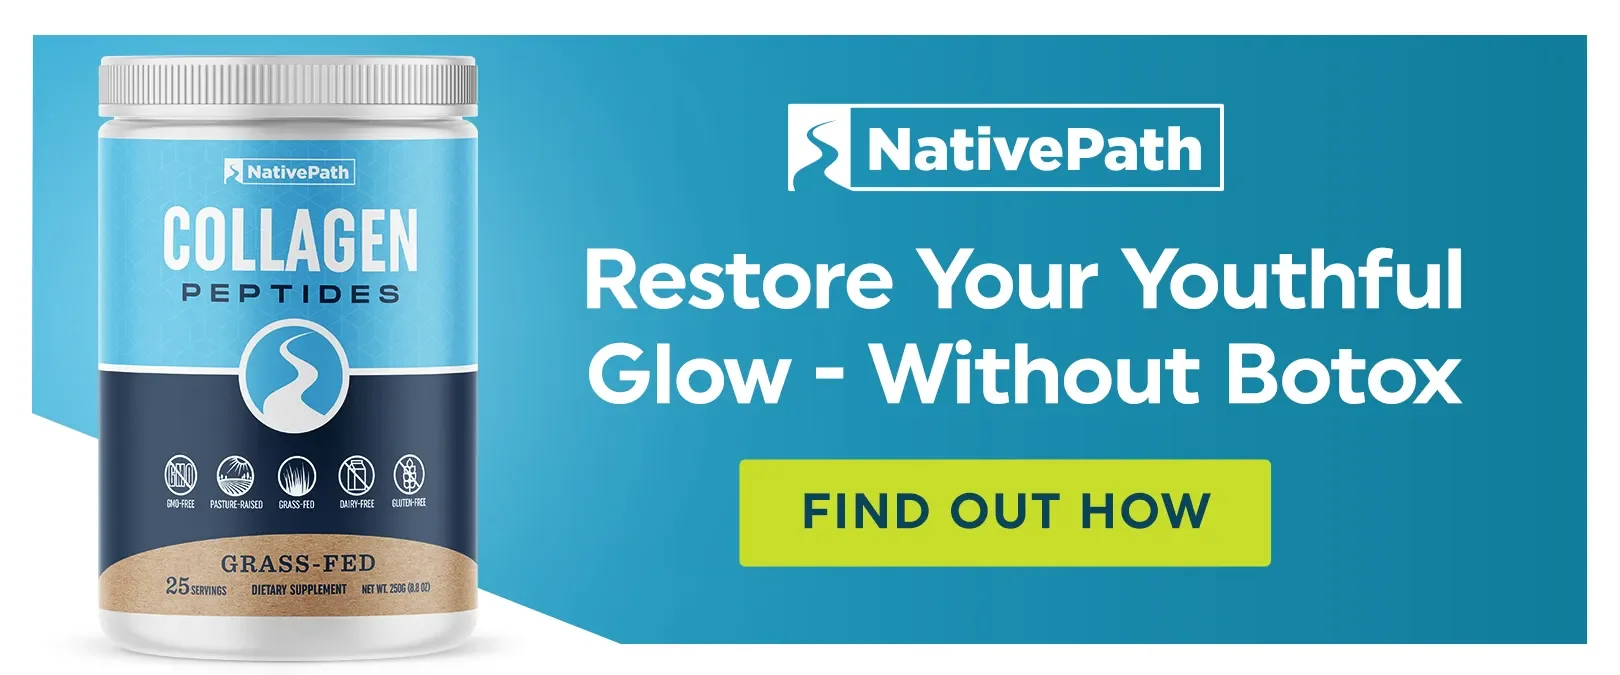 NativePath Collagen Powder to Restore Your Youthful Glow